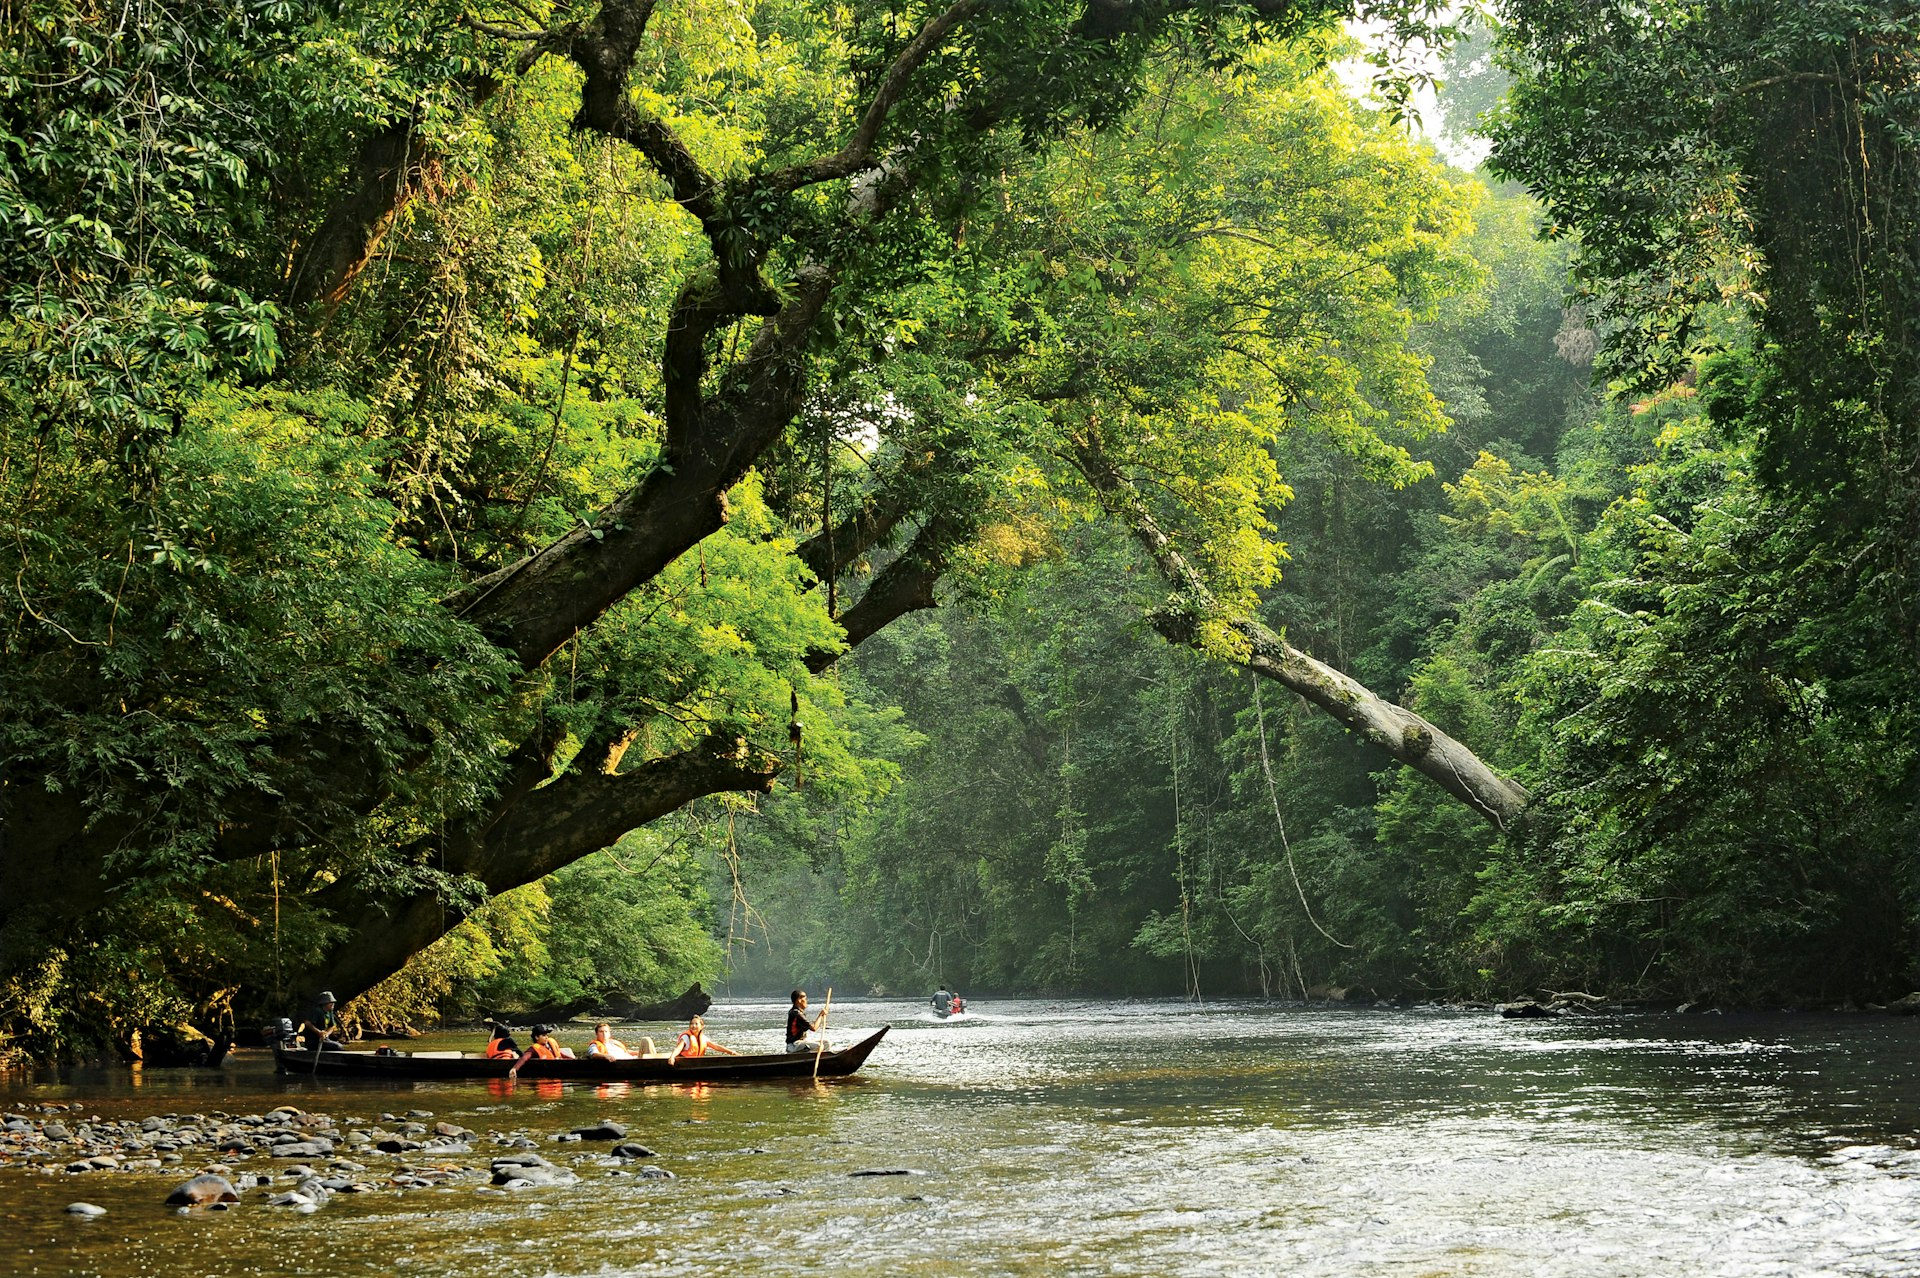 Tourist boats on a river in the jungle at Lata Berkoh in Taman Negara